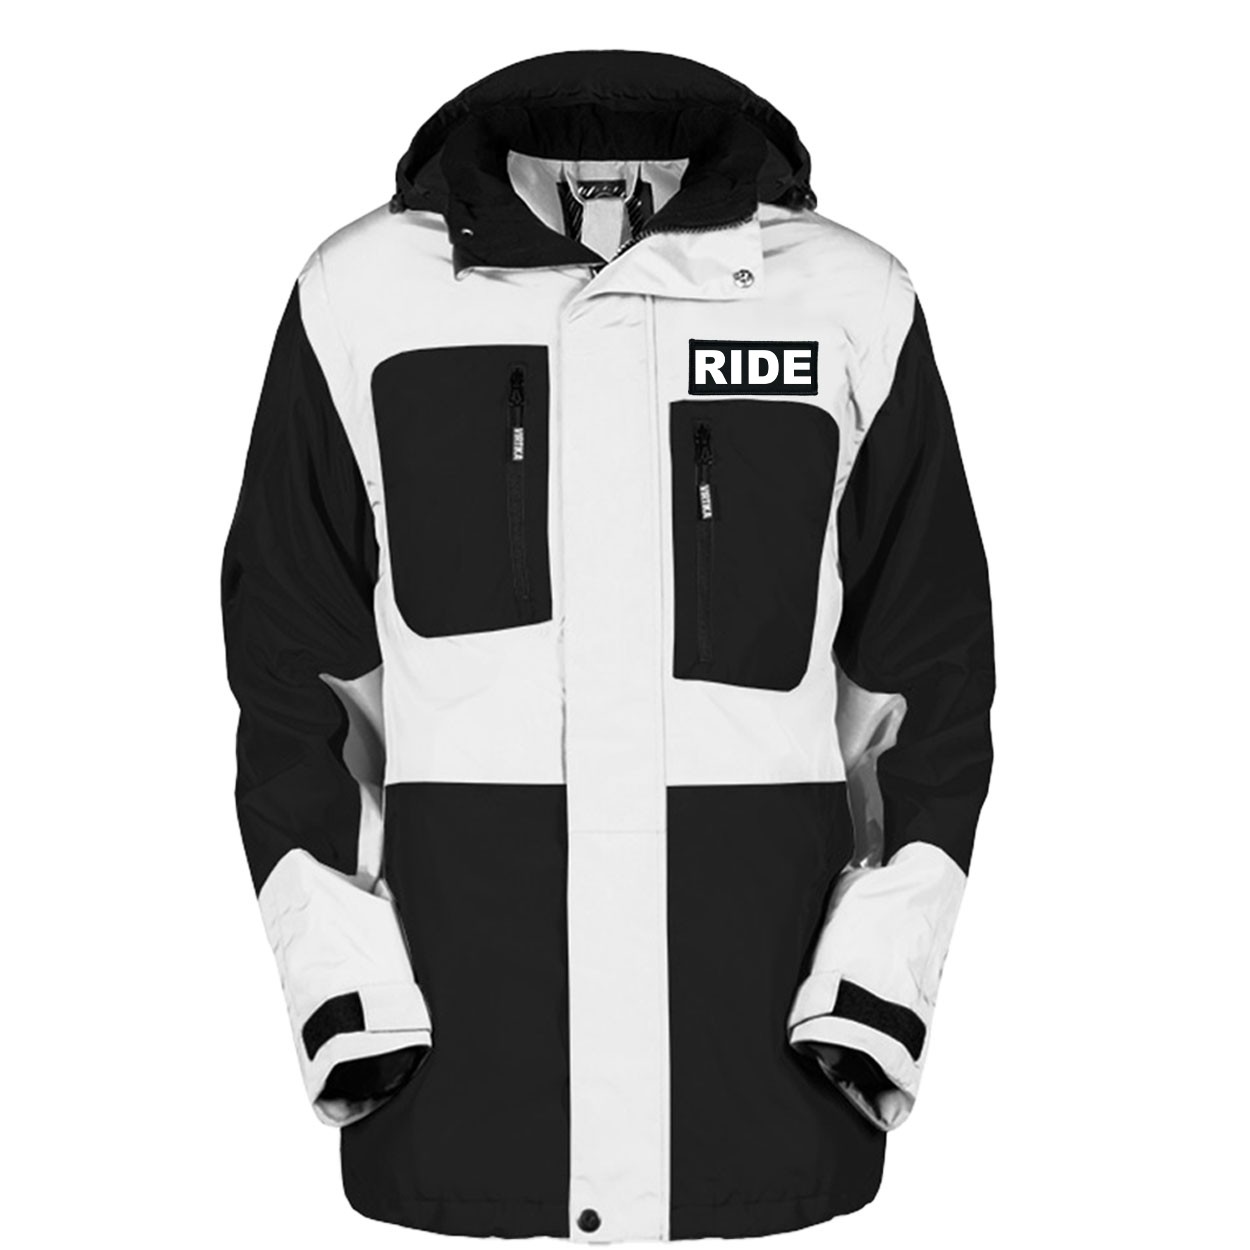 Ride Brand Logo Pro Waterproof Breathable Winter Virtika Jacket Black/White (White Logo)